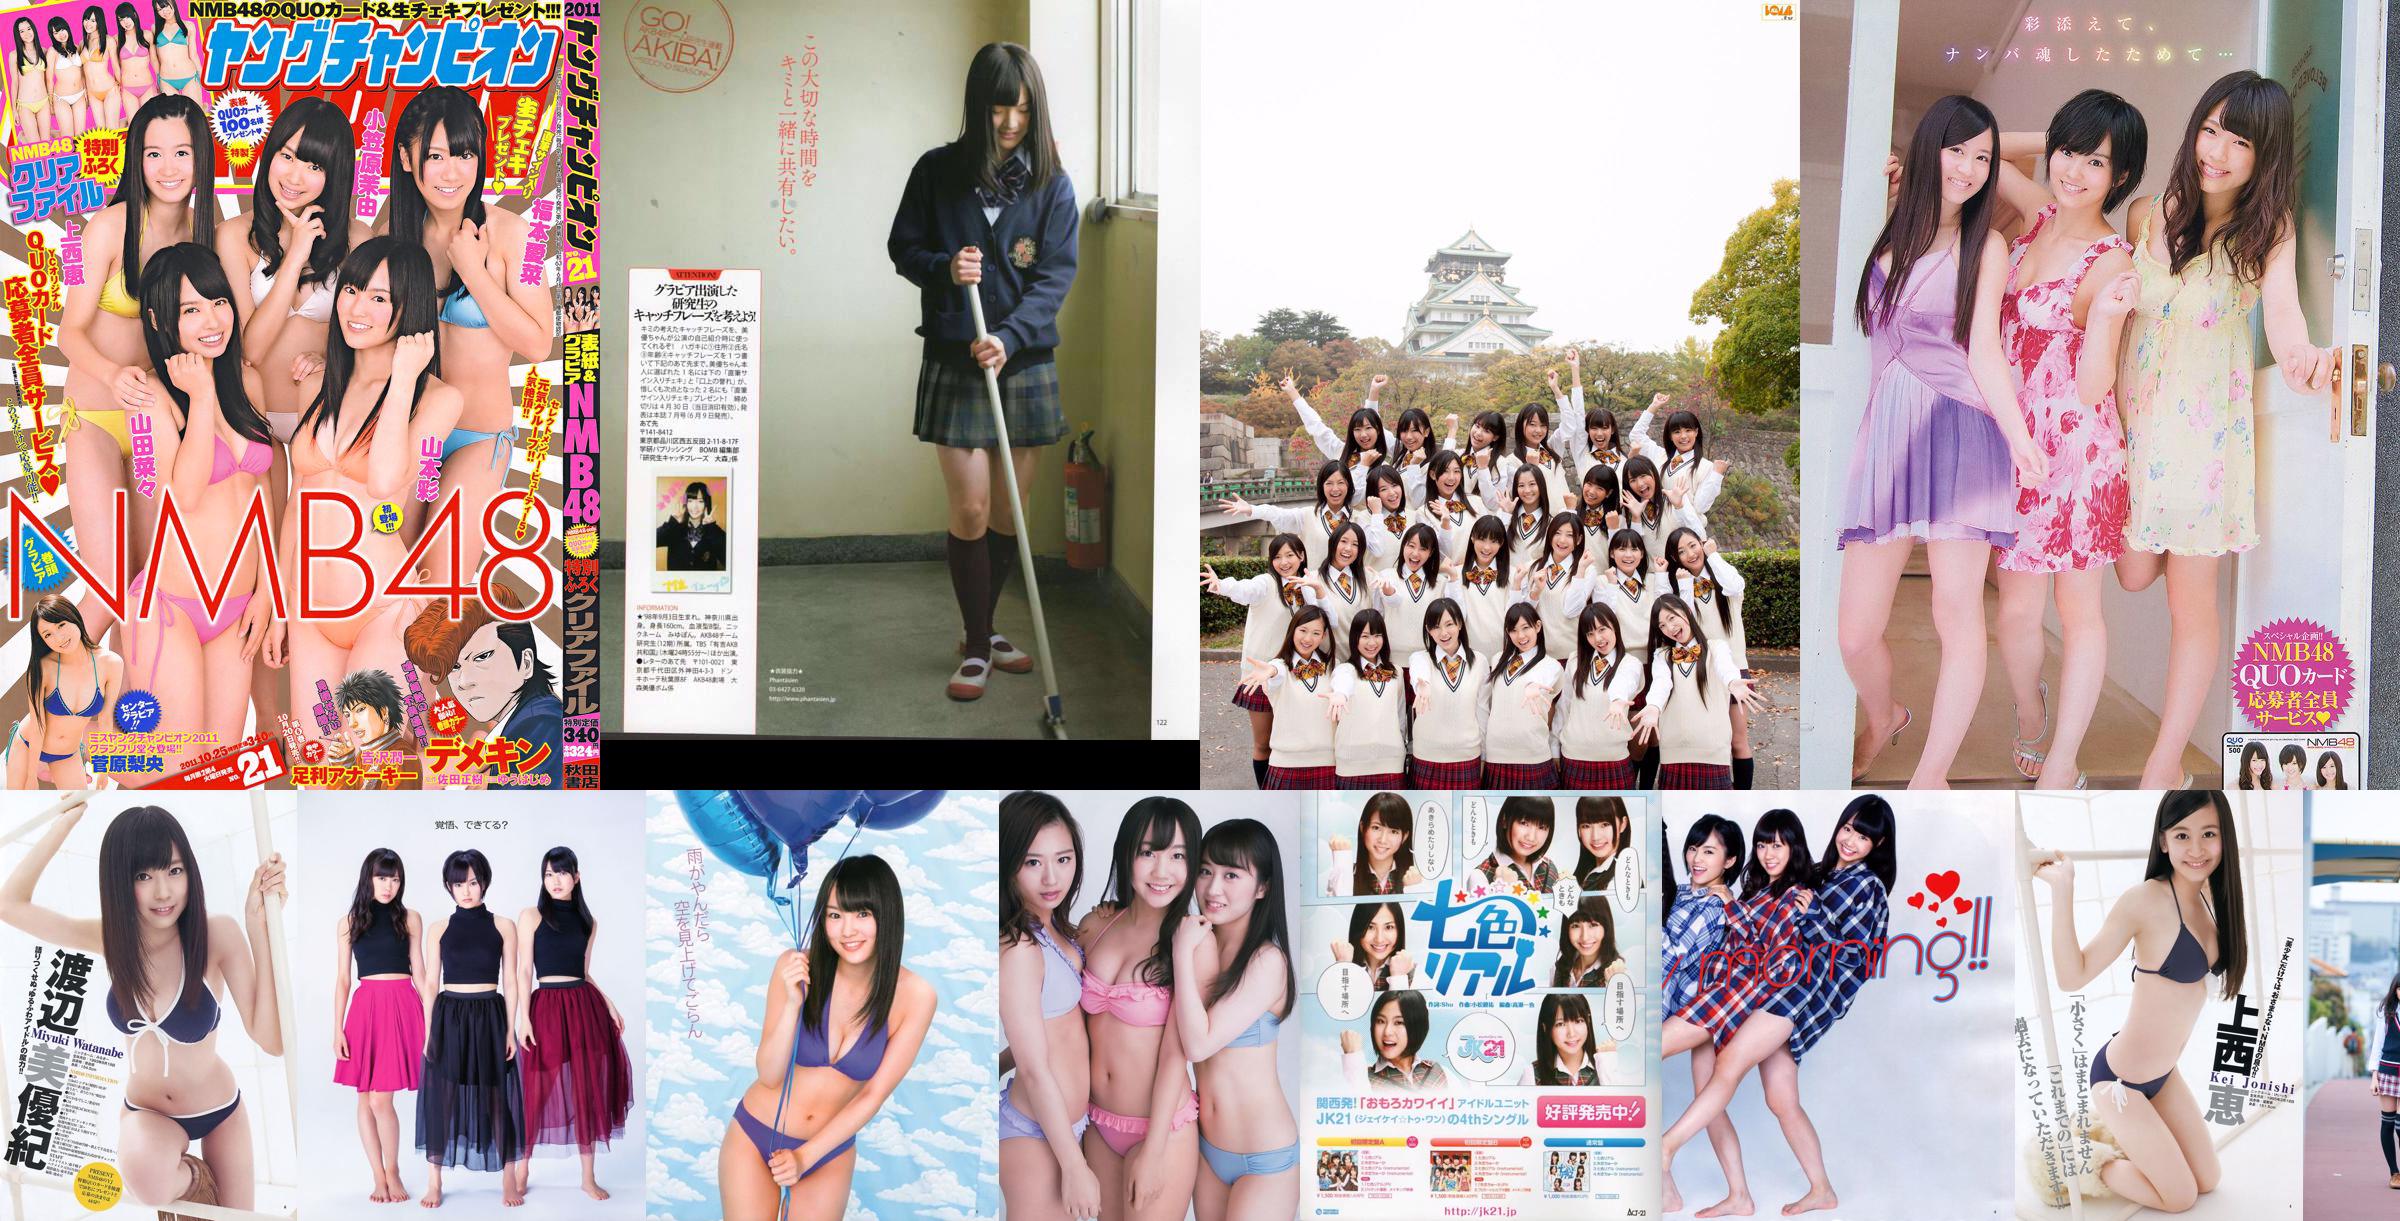 [Jeune Champion] NMB48 Nagisa Odajima 2013 N°23 Nagisa Odajima No.9d977e Page 1